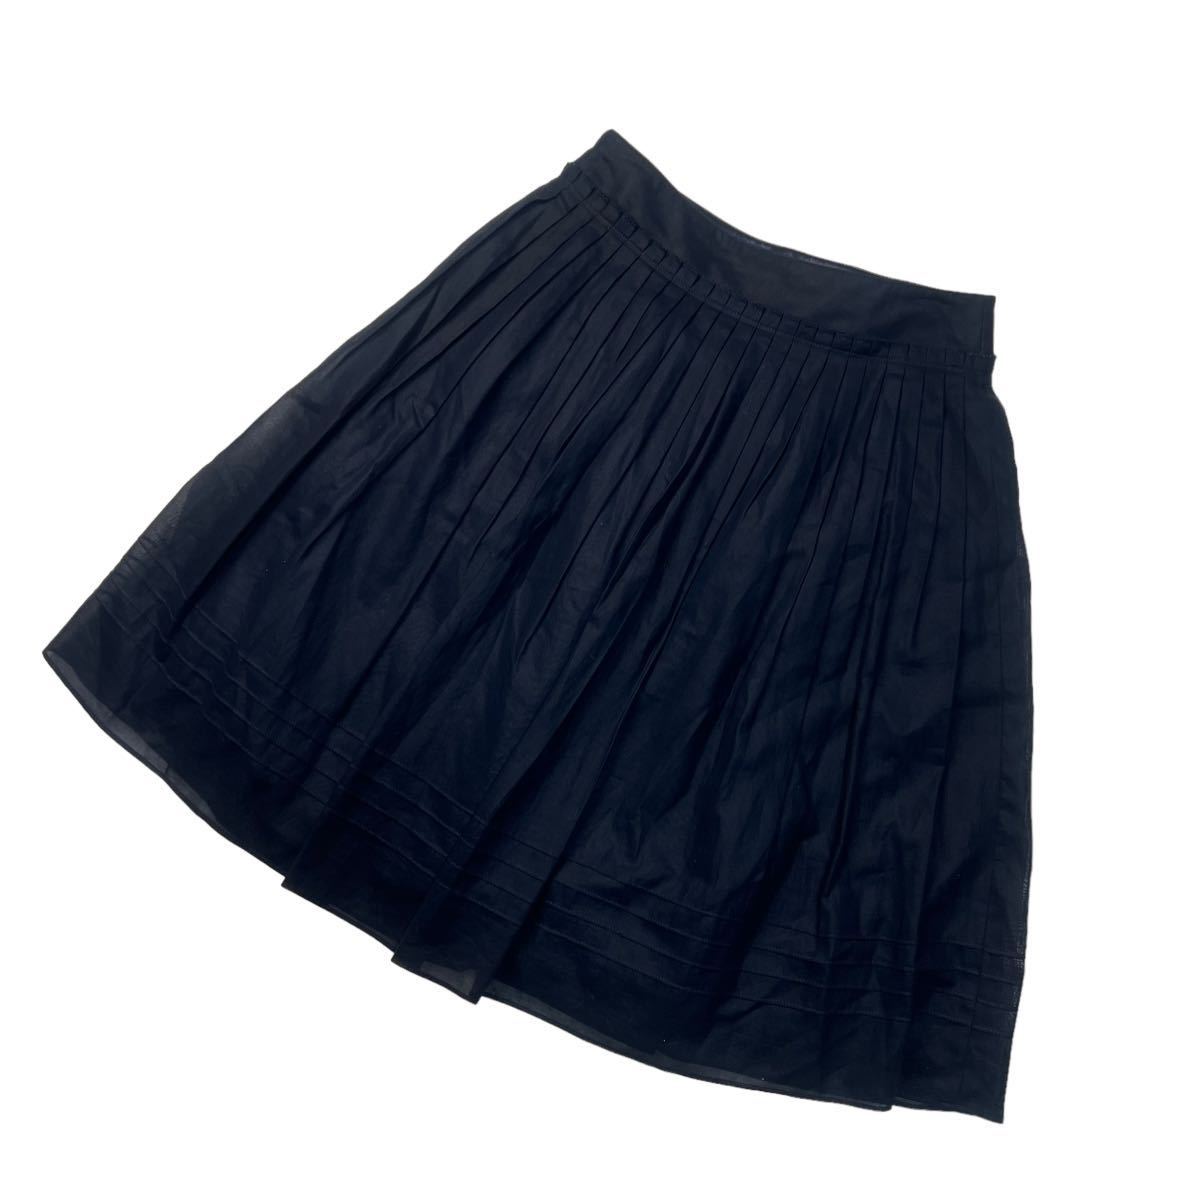 MACKINTOSH PHILOSOPHY Macintosh firosofi- skirt pleat navy blue color size 34 knee height 